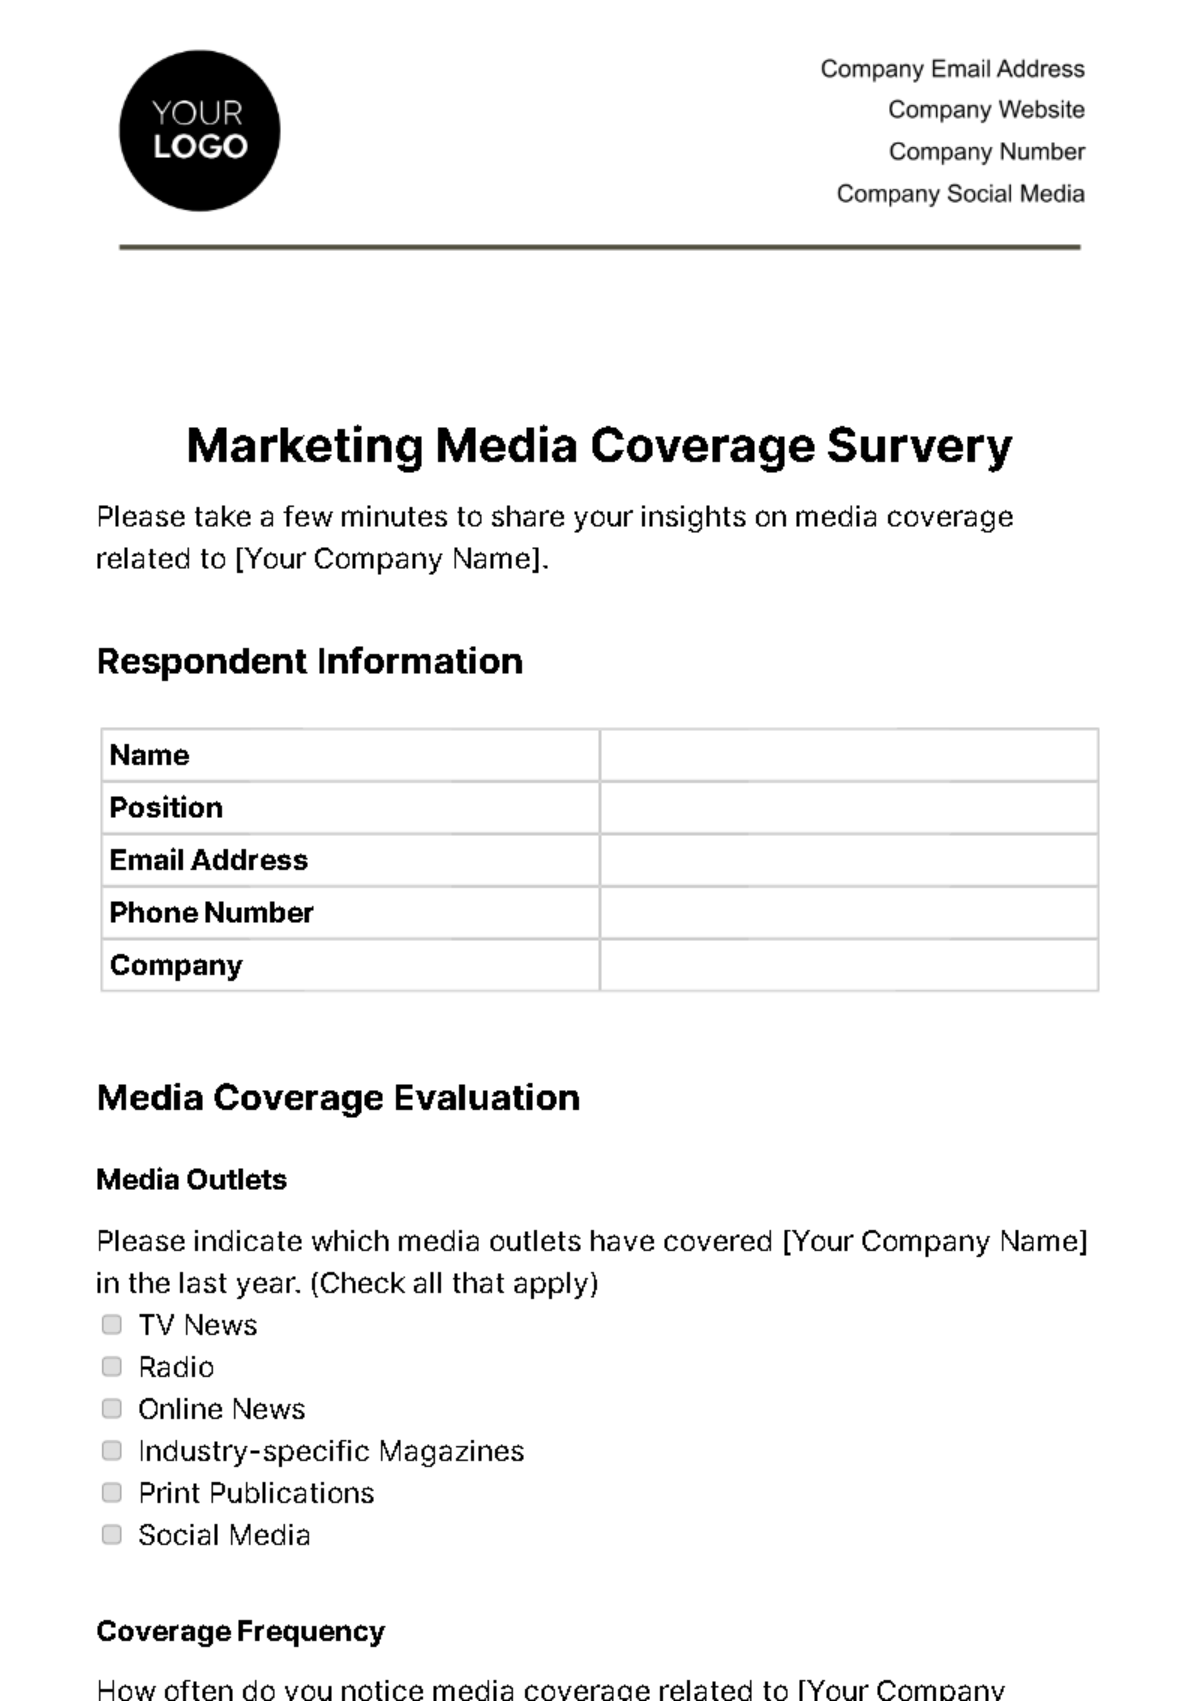 Marketing Media Coverage Survey Template